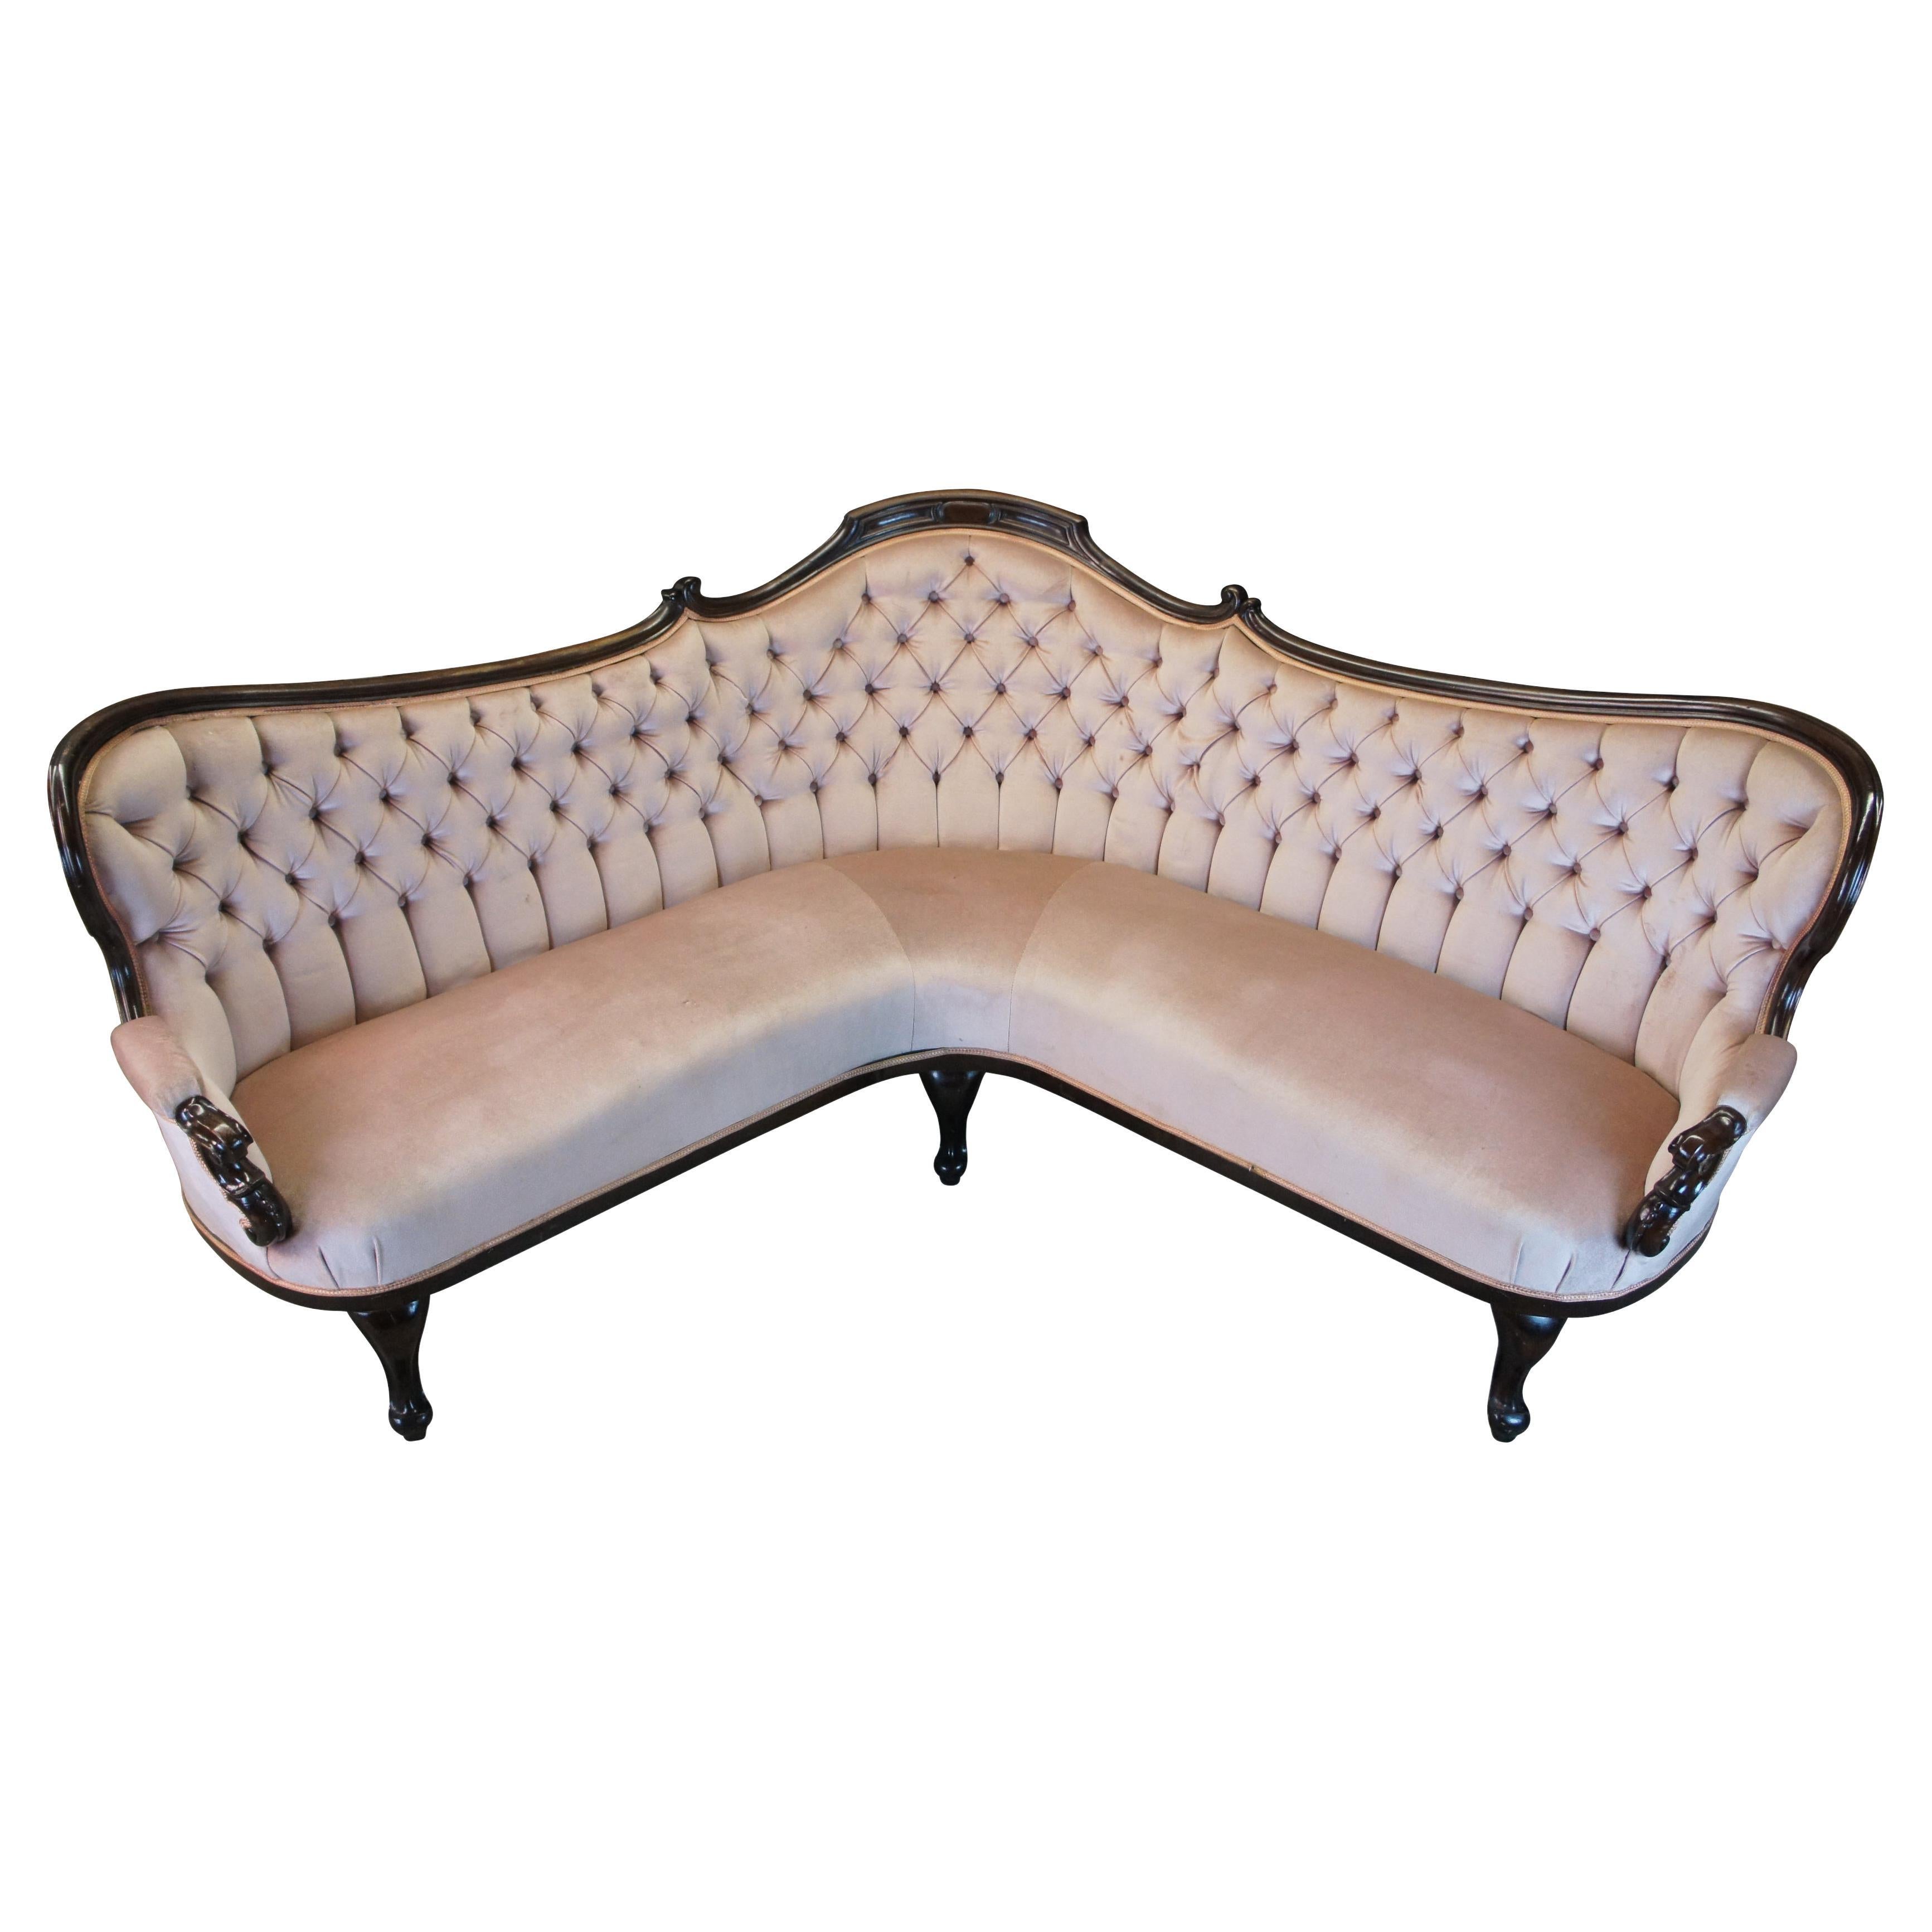 Rare Antique Victorian Walnut Tufted Serpentine Parlor Corner Sofa Settee Couch